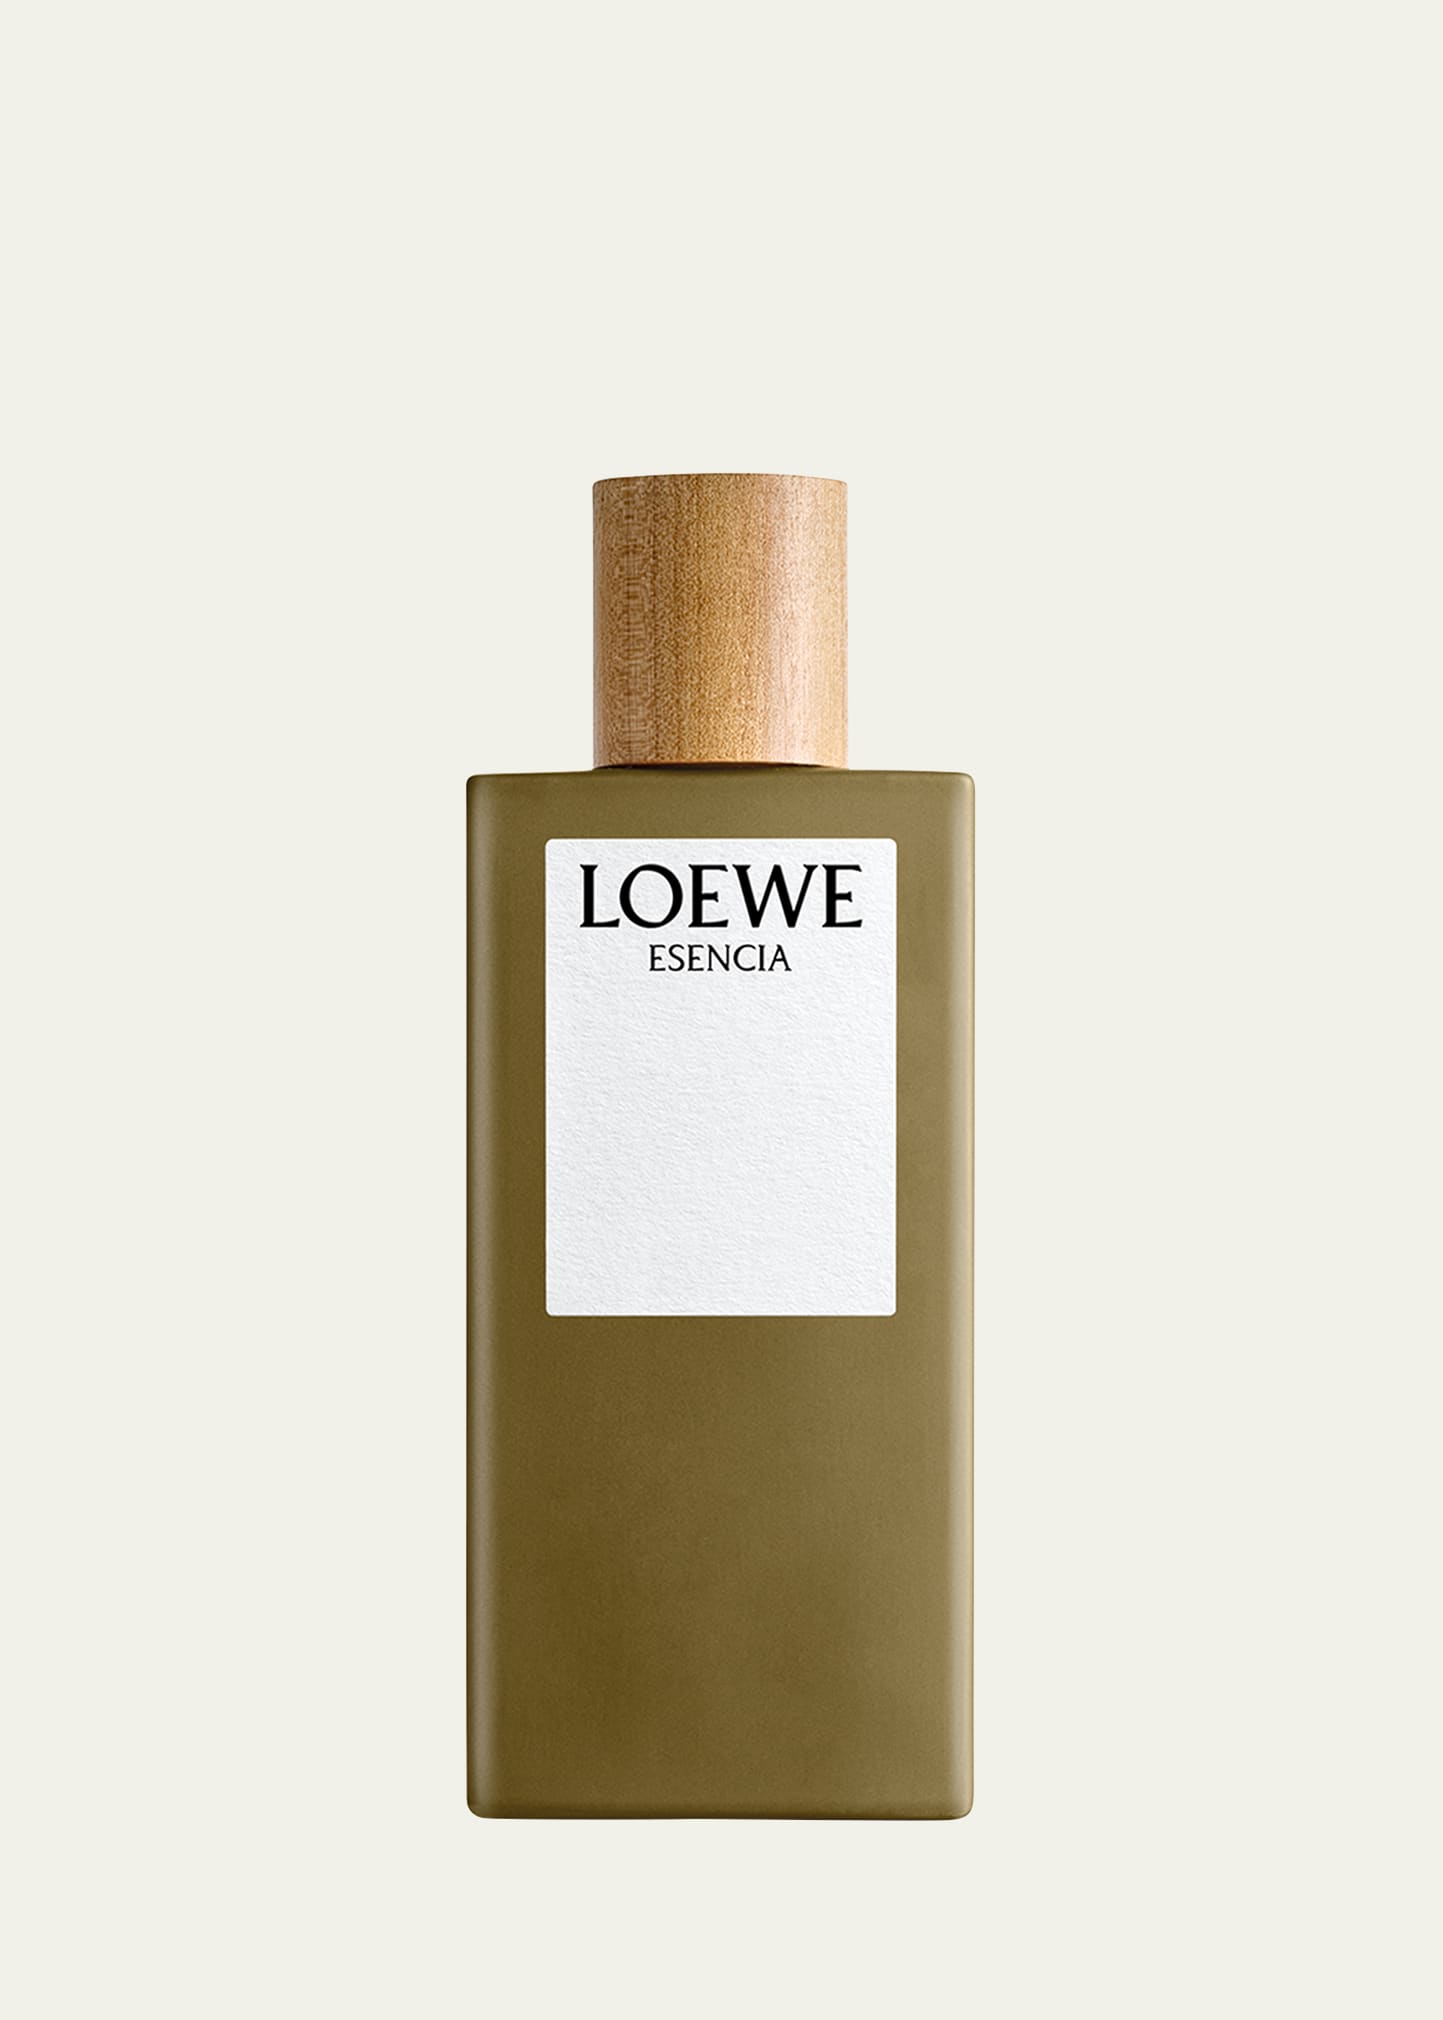 Loewe 3.4 oz. Esencia Eau de Toilette